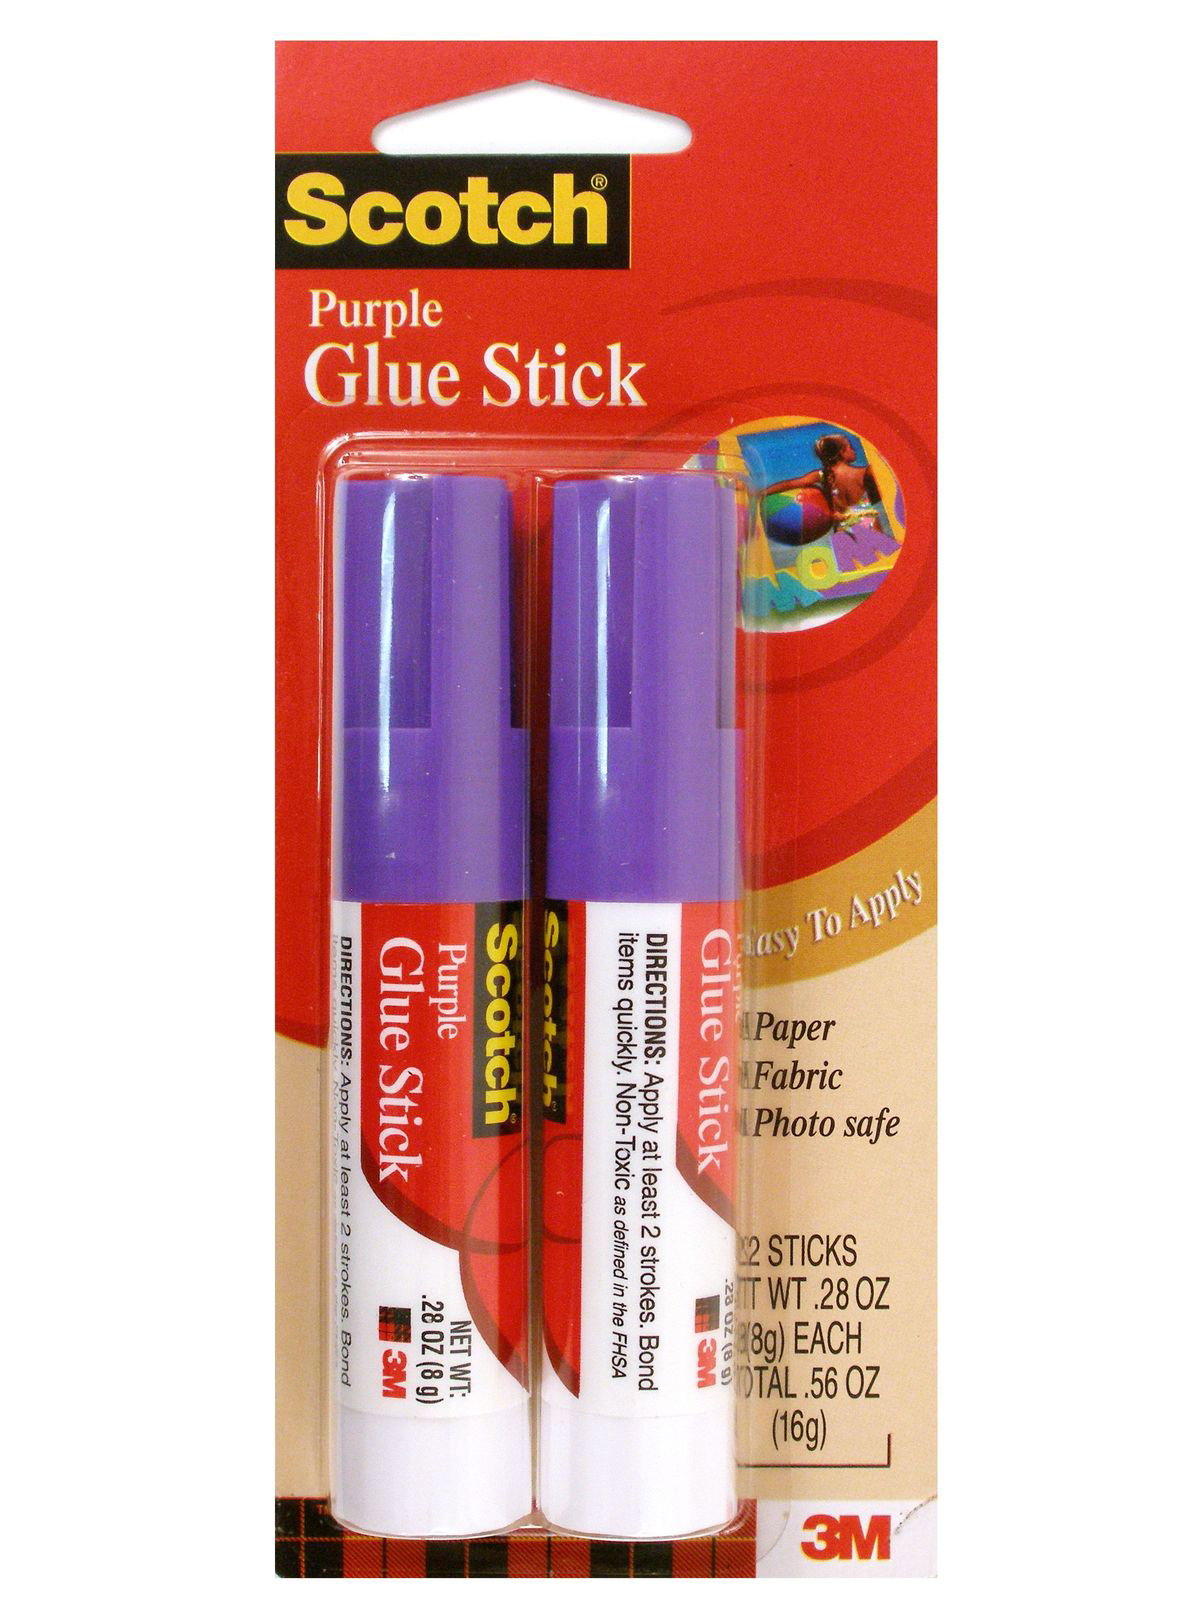 3M Scotch Purple Glue Stick 15gms for Paper at Rs 26/piece in